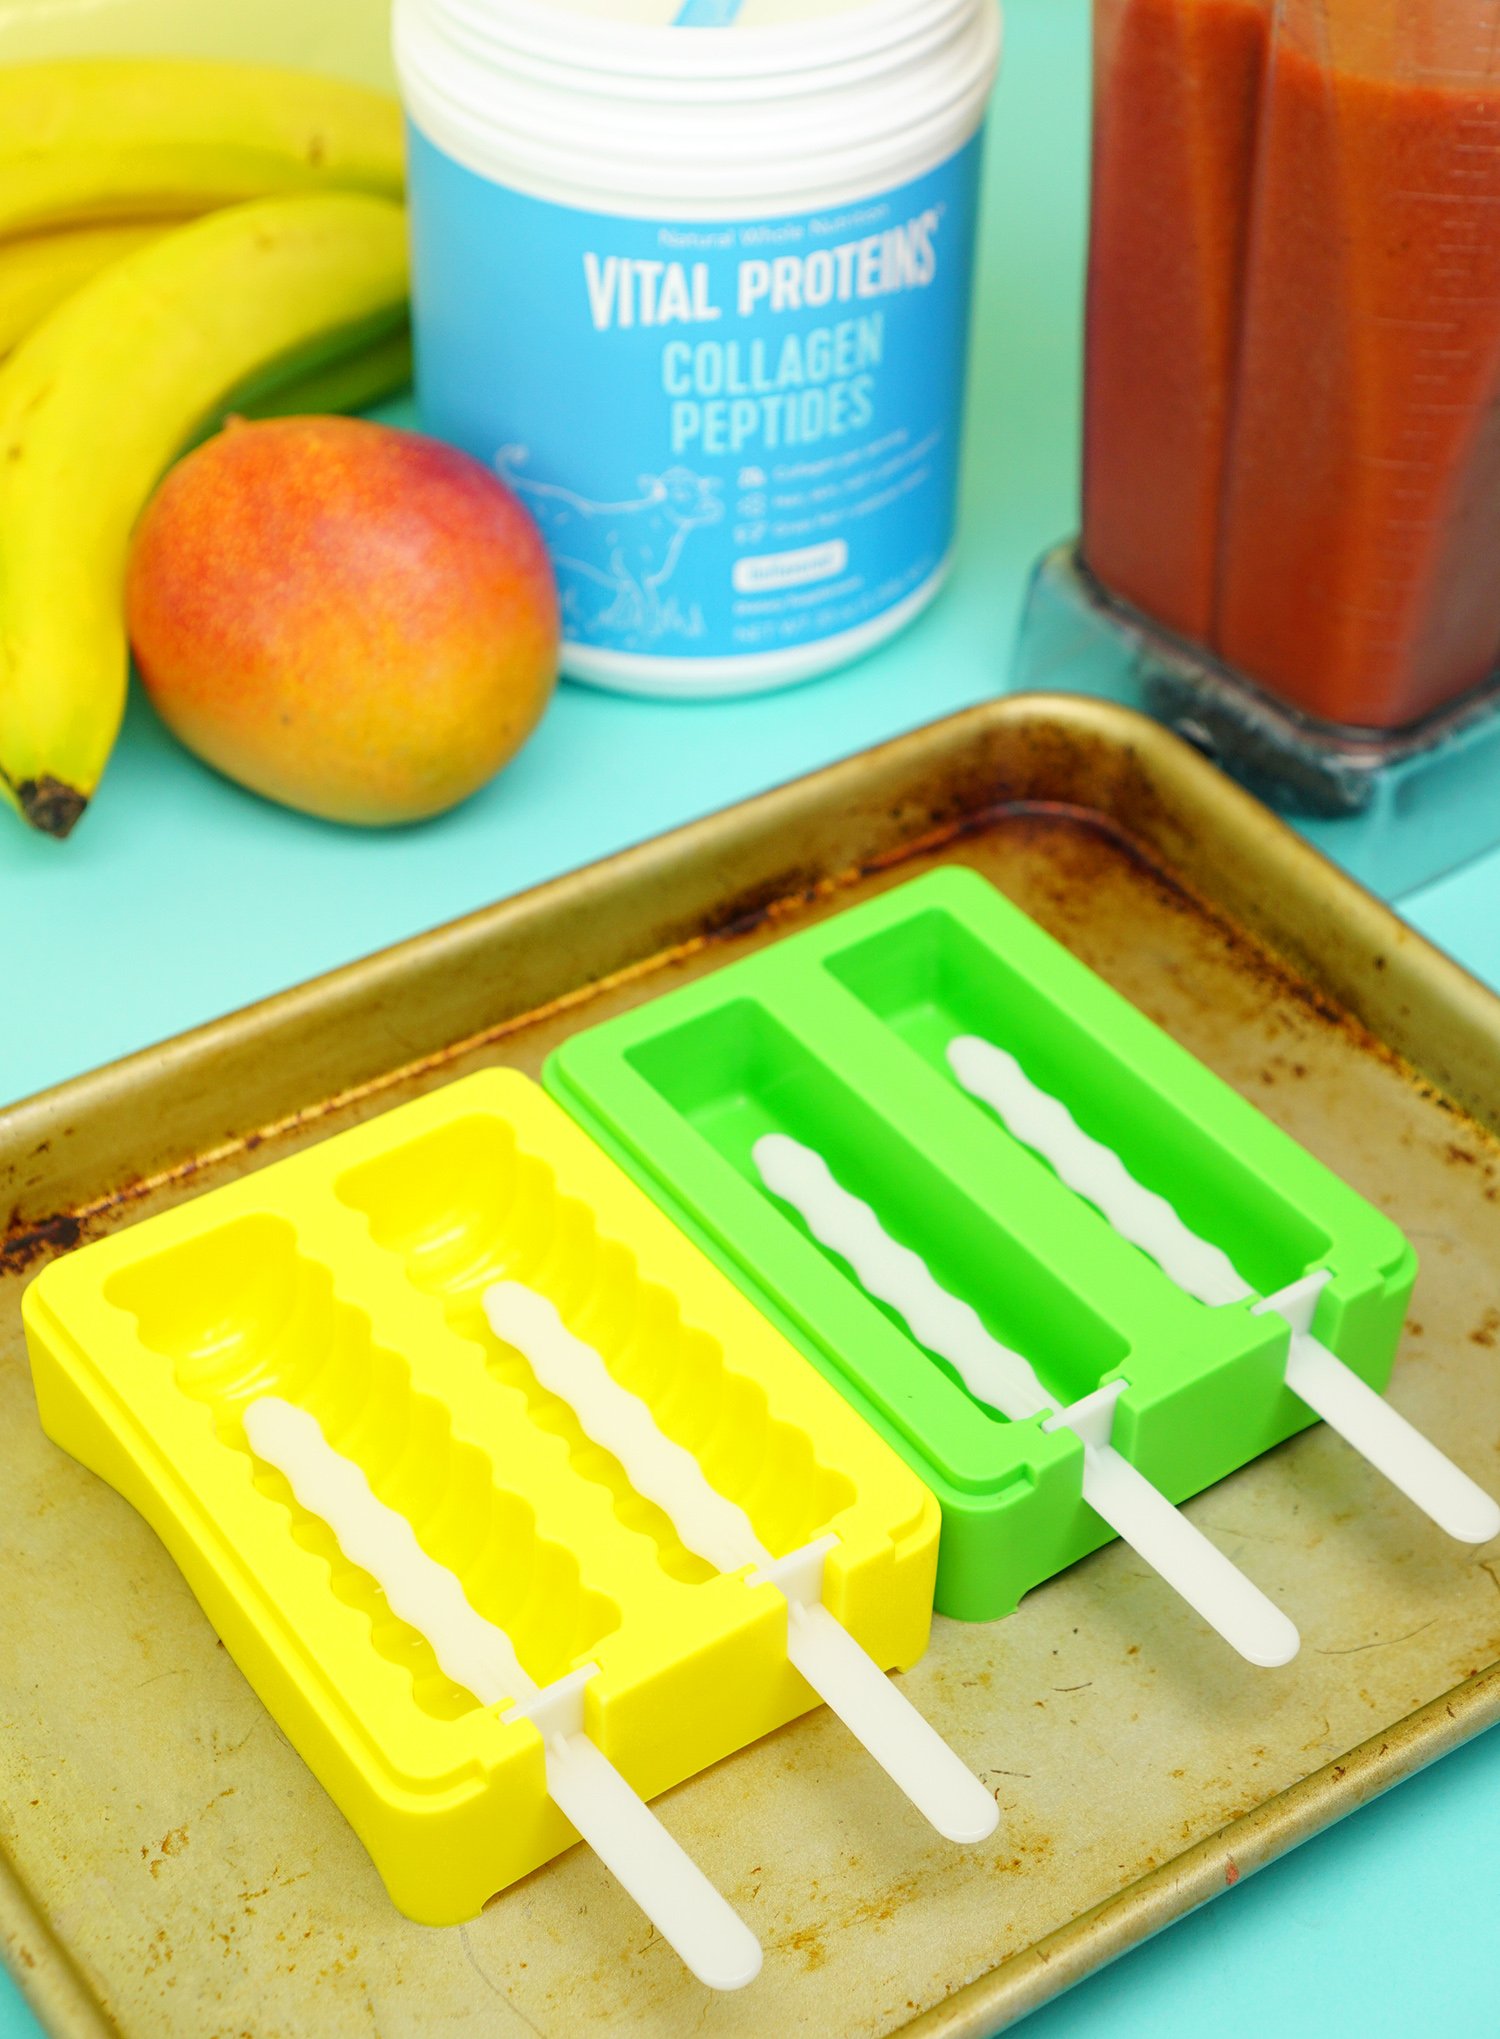 popsicle sticks inserted into freezer pop molds on tray